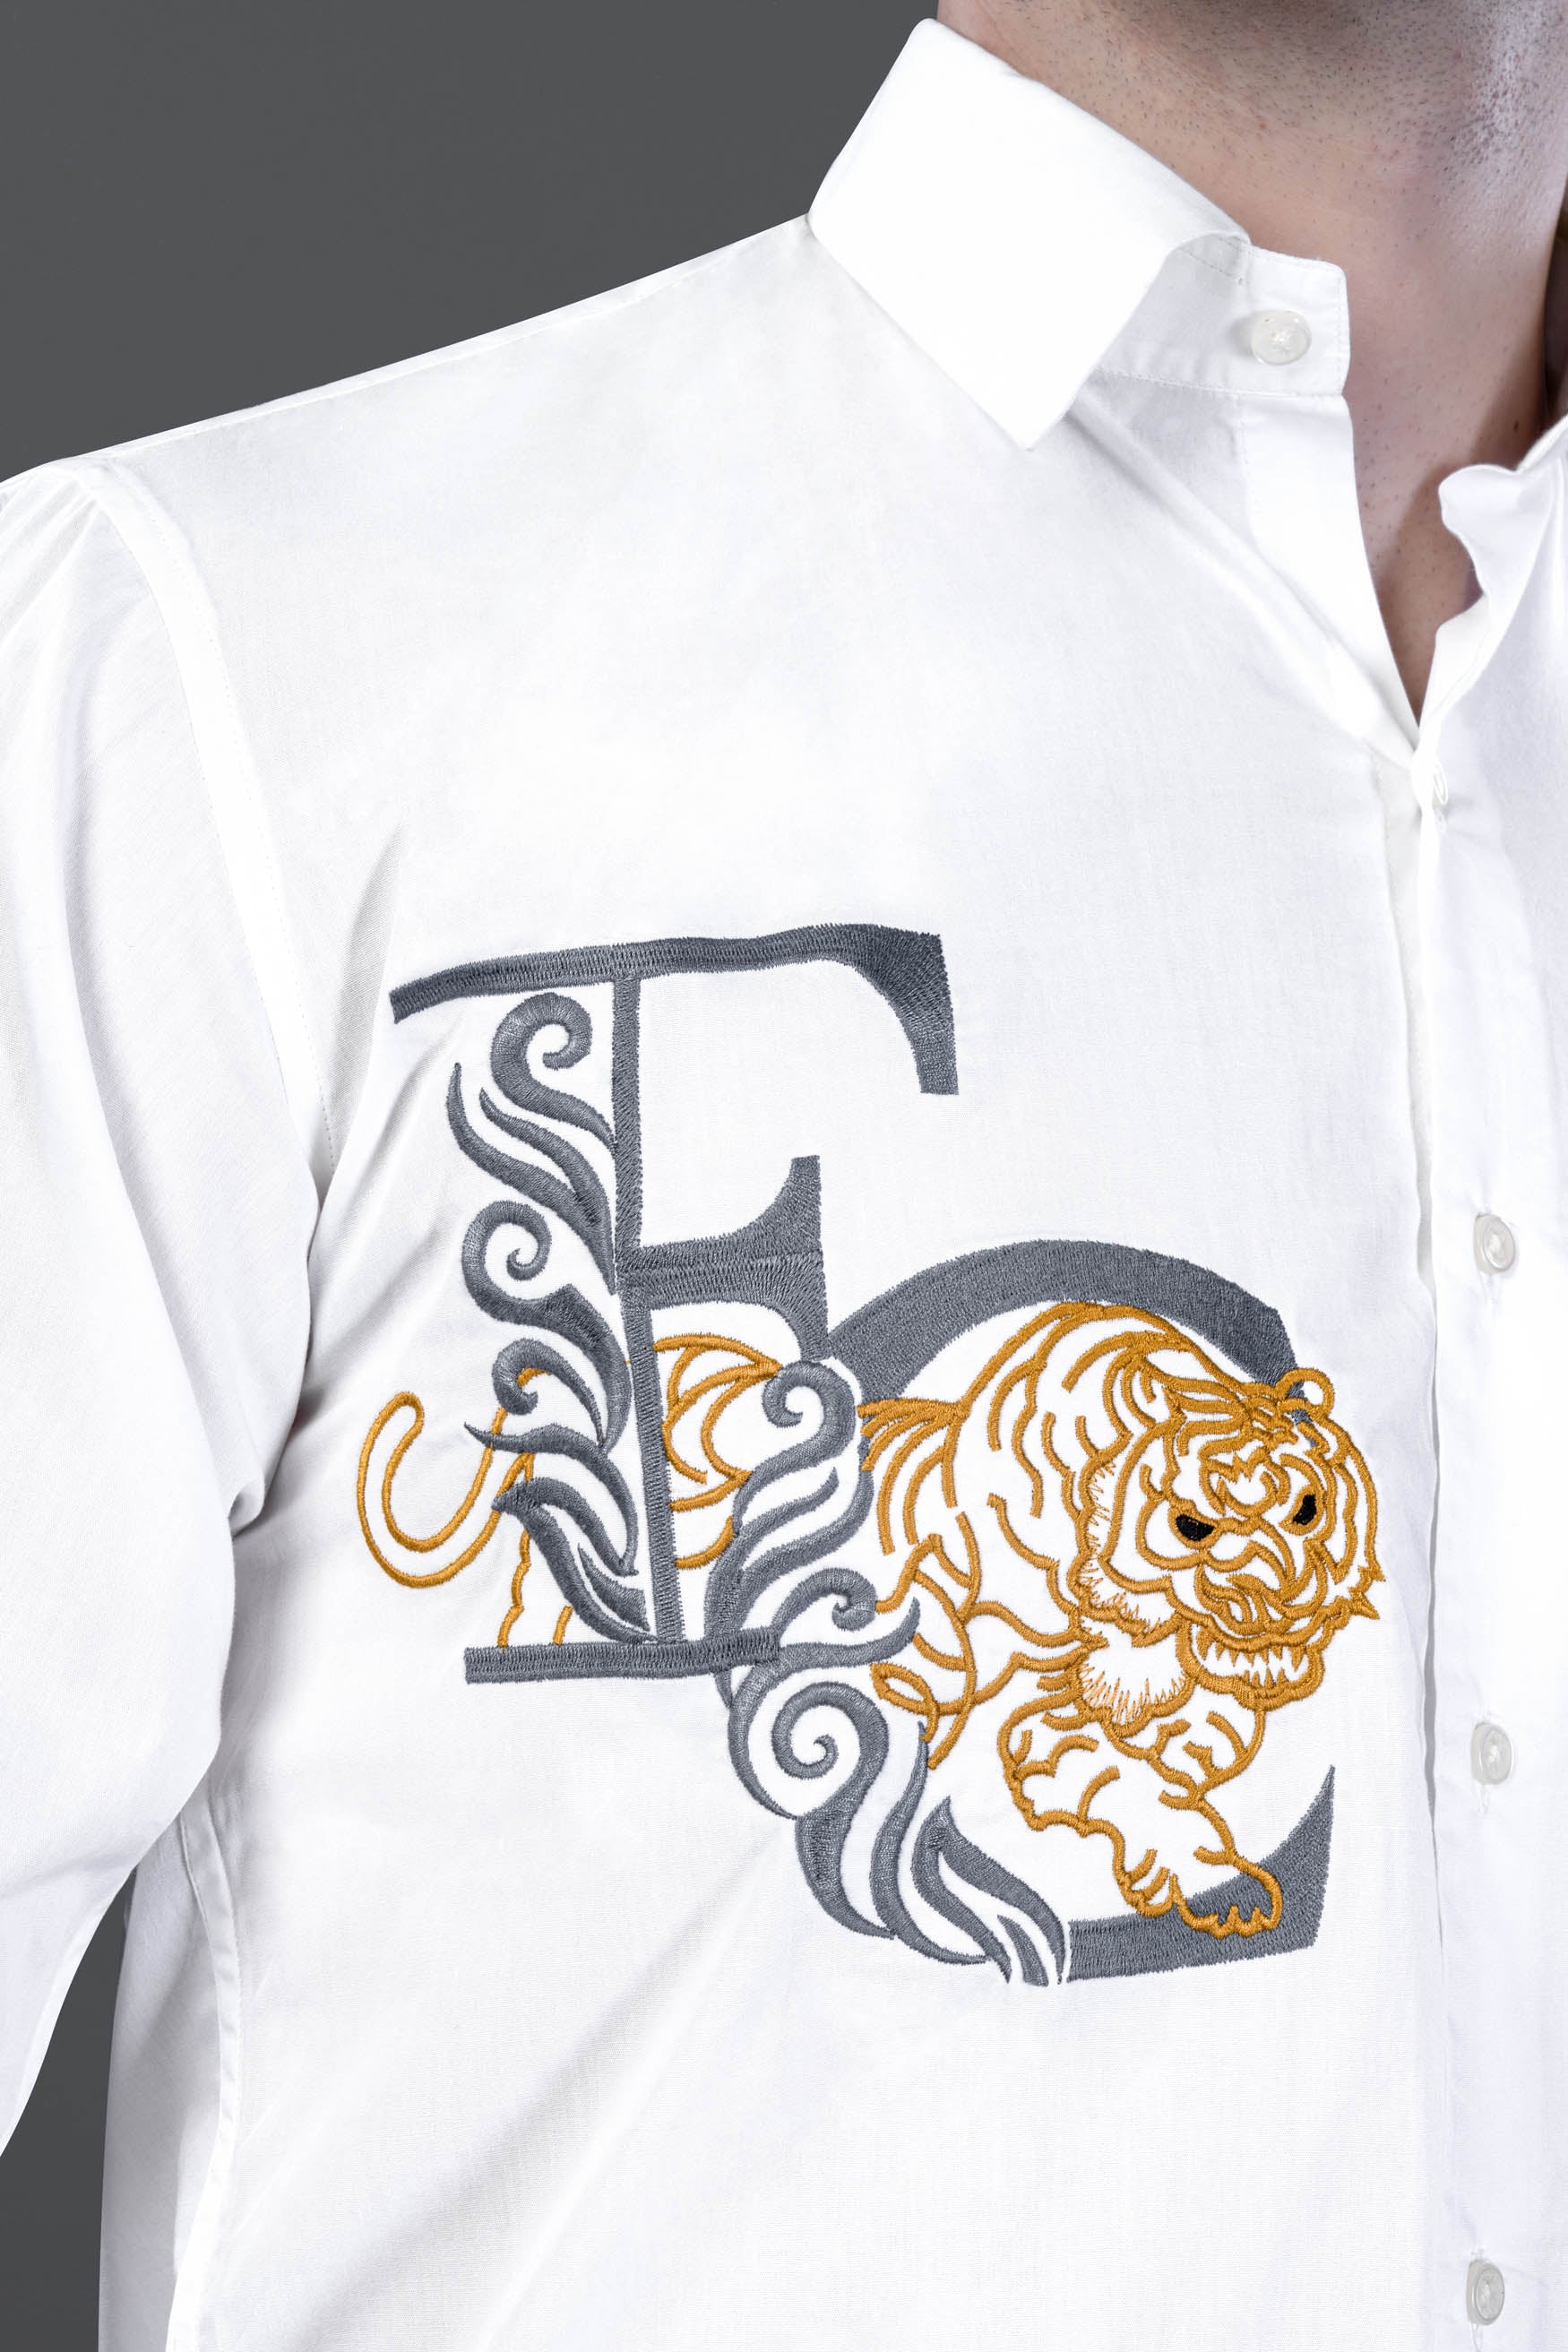 Bright White with Brand Acronym and Tiger Embroidered Premium Cotton Designer Shirt 12108-E361-38, 12108-E361-H-38, 12108-E361-39, 12108-E361-H-39, 12108-E361-40, 12108-E361-H-40, 12108-E361-42, 12108-E361-H-42, 12108-E361-44, 12108-E361-H-44, 12108-E361-46, 12108-E361-H-46, 12108-E361-48, 12108-E361-H-48, 12108-E361-50, 12108-E361-H-50, 12108-E361-52, 12108-E361-H-52